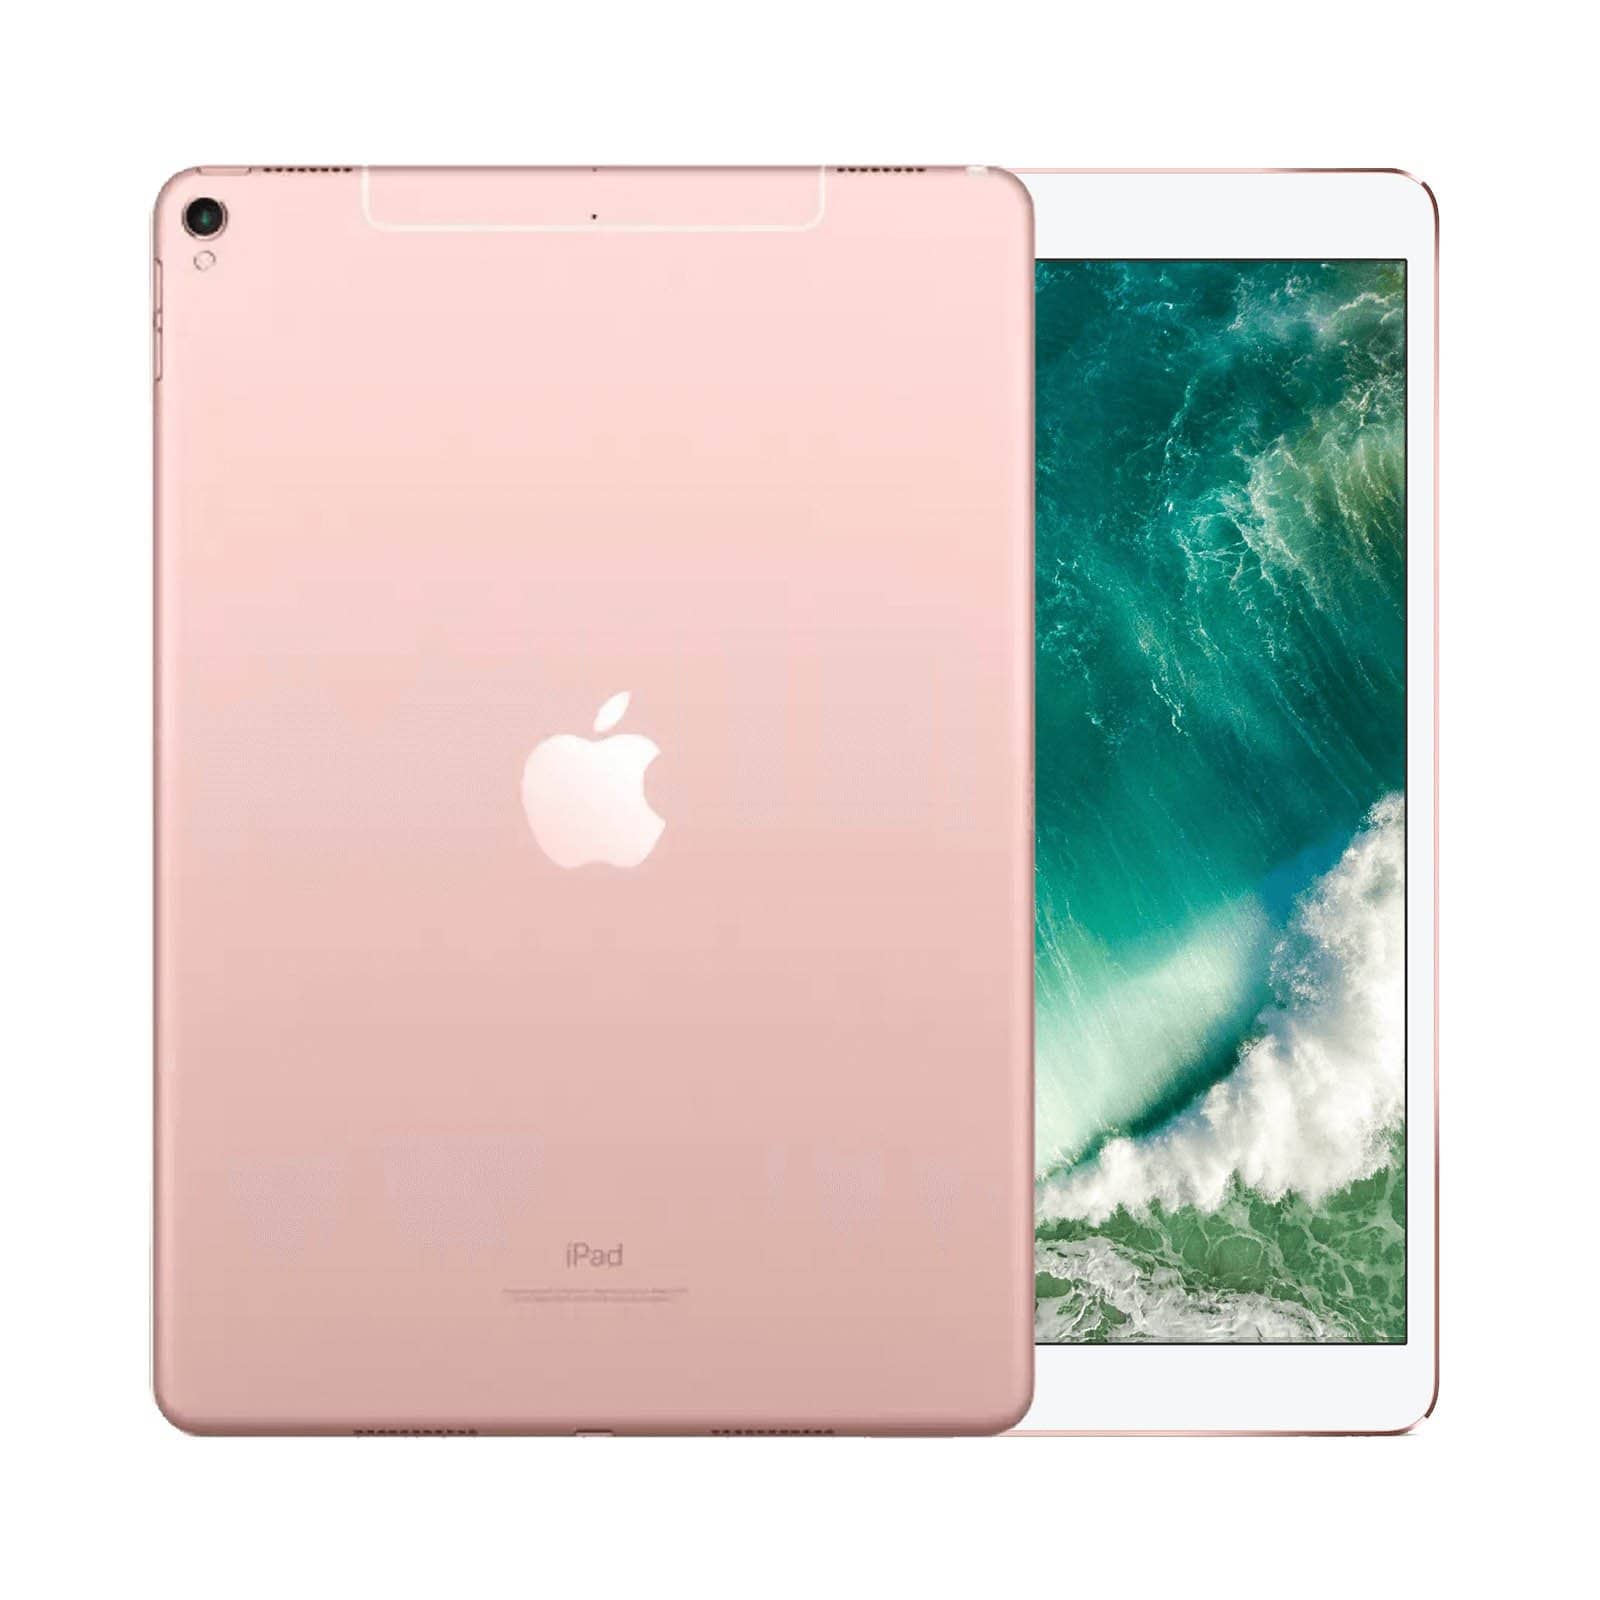 iPad Pro 10.5 Inch 256GB Rose Gold Very Good - Unlocked 256GB Rose Gold Very Good